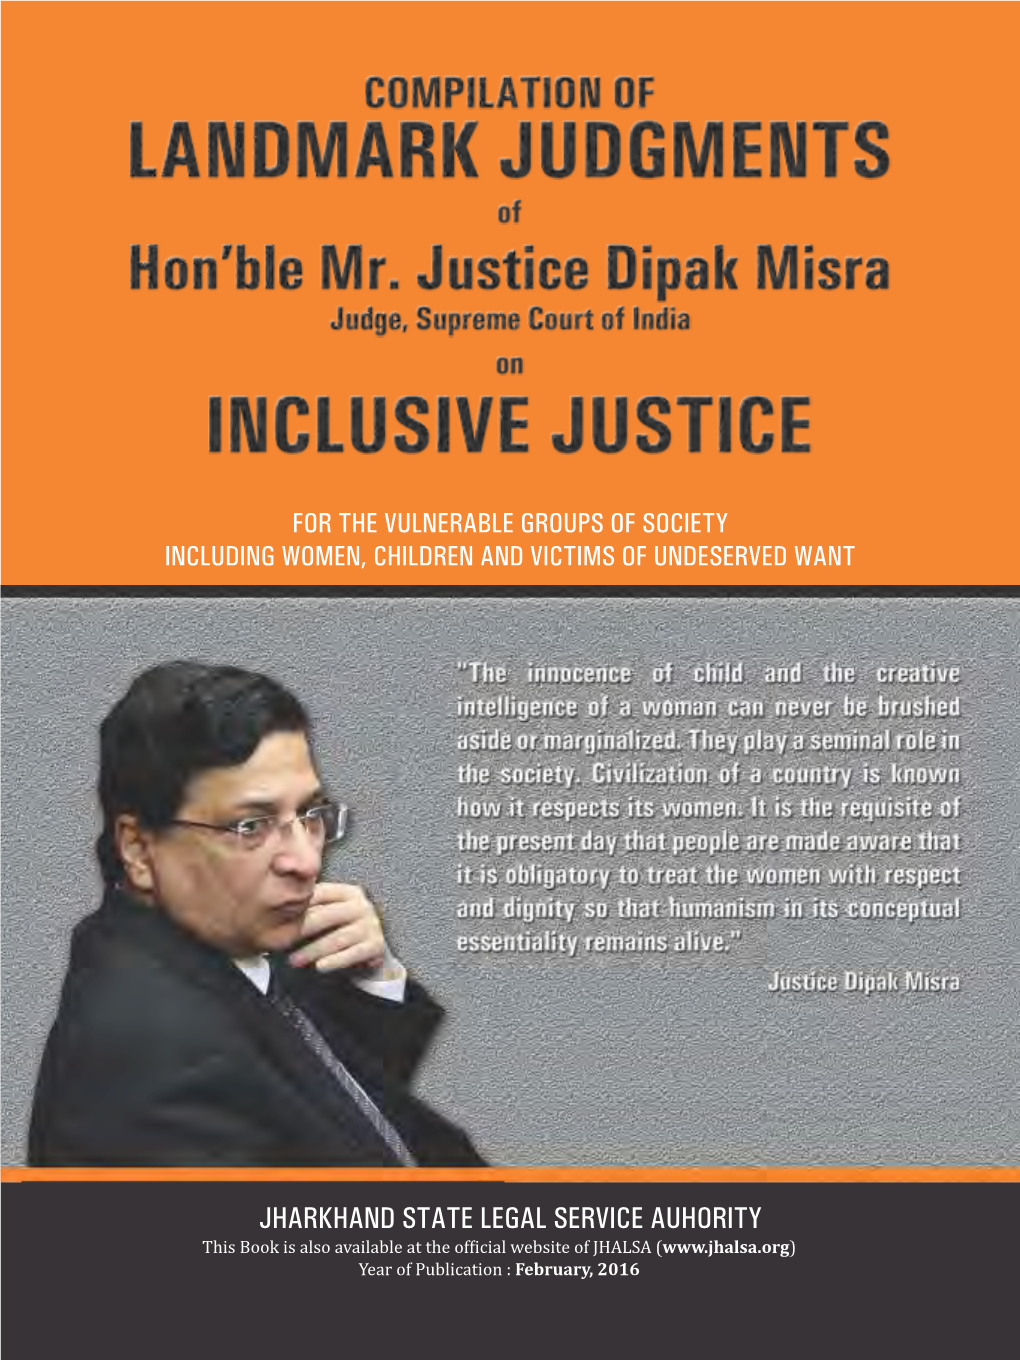 Landmark Judgements of Hon'ble Mr. Justice Dipak Misra